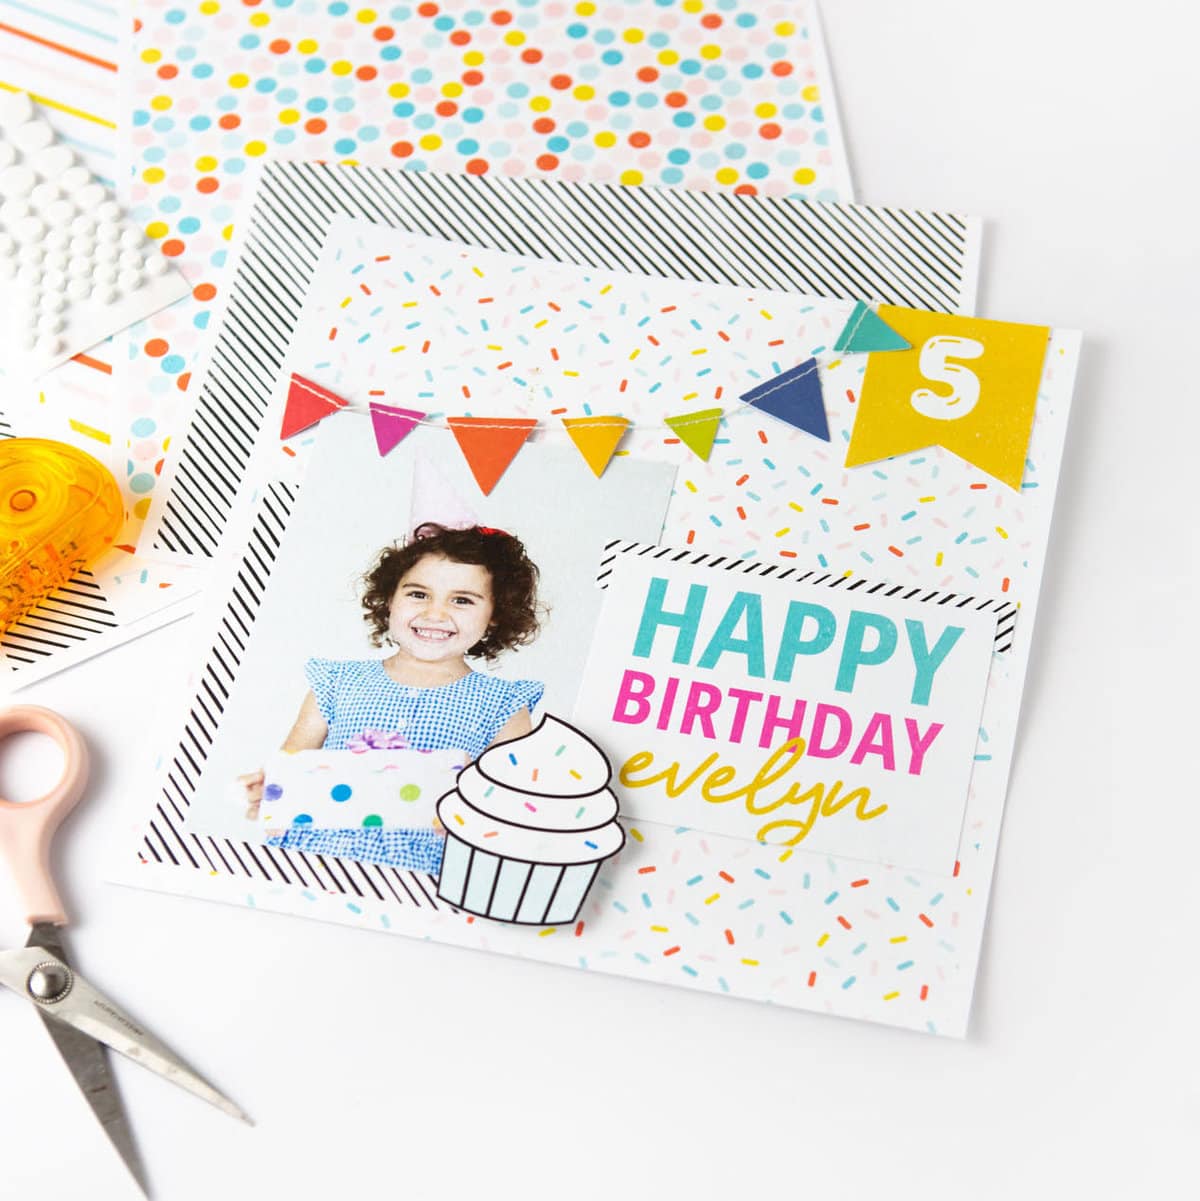 DIY Mini Scrapbook/ How to make Birthday Scrapbook using One Sheet 